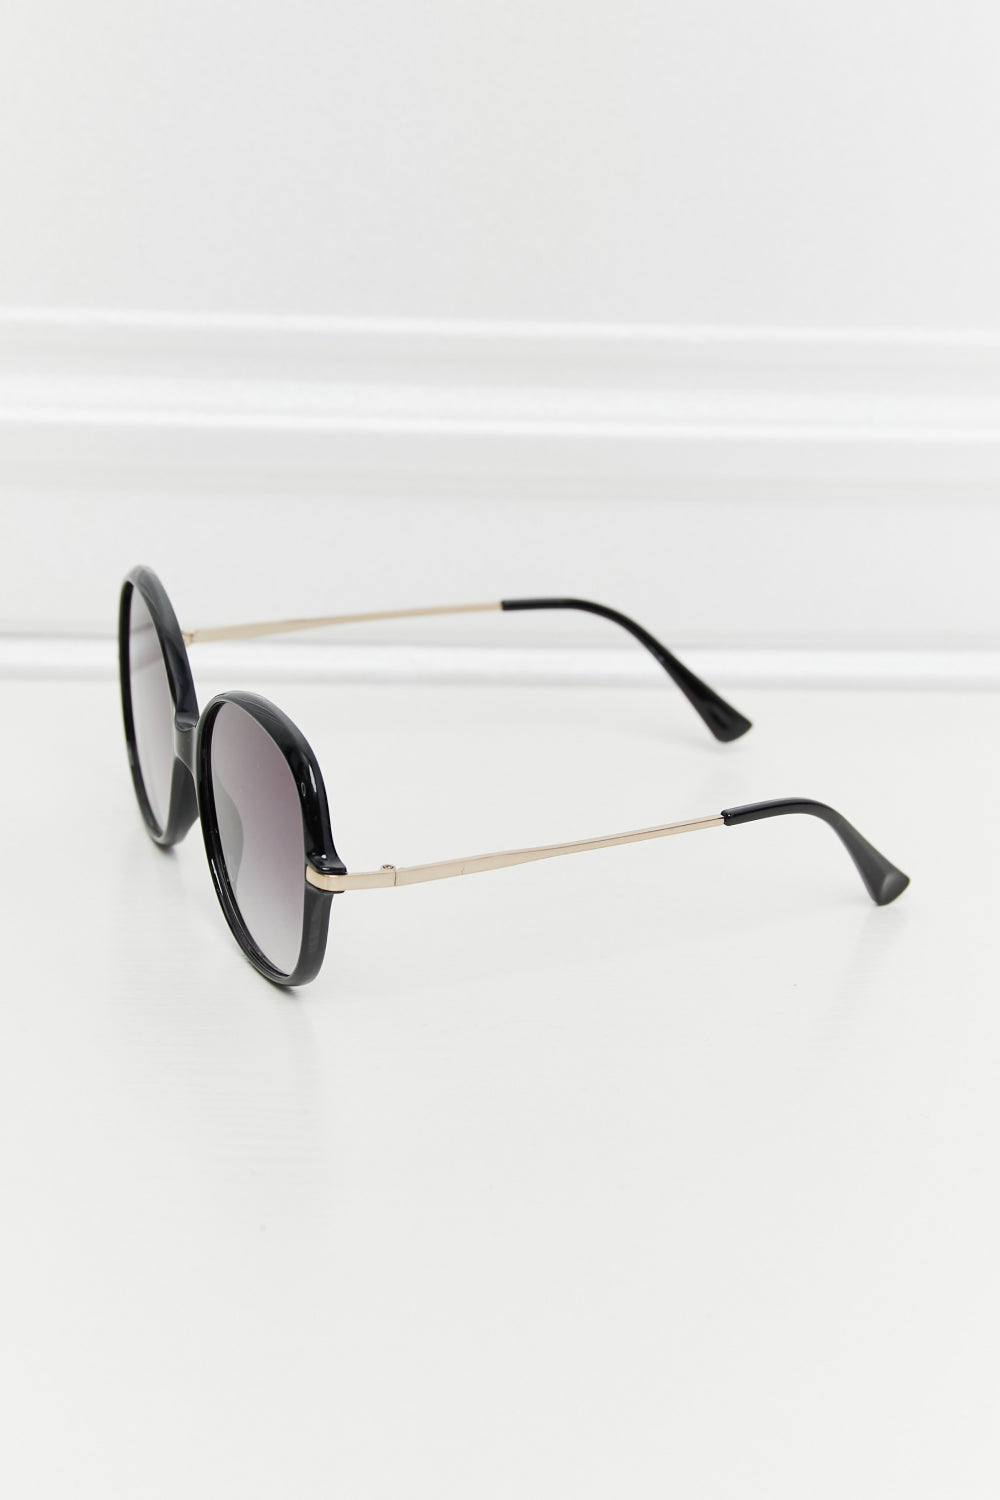 - Metal-Plastic Hybrid Full Rim Sunglasses - 2 colors - Sunglasses at TFC&H Co.